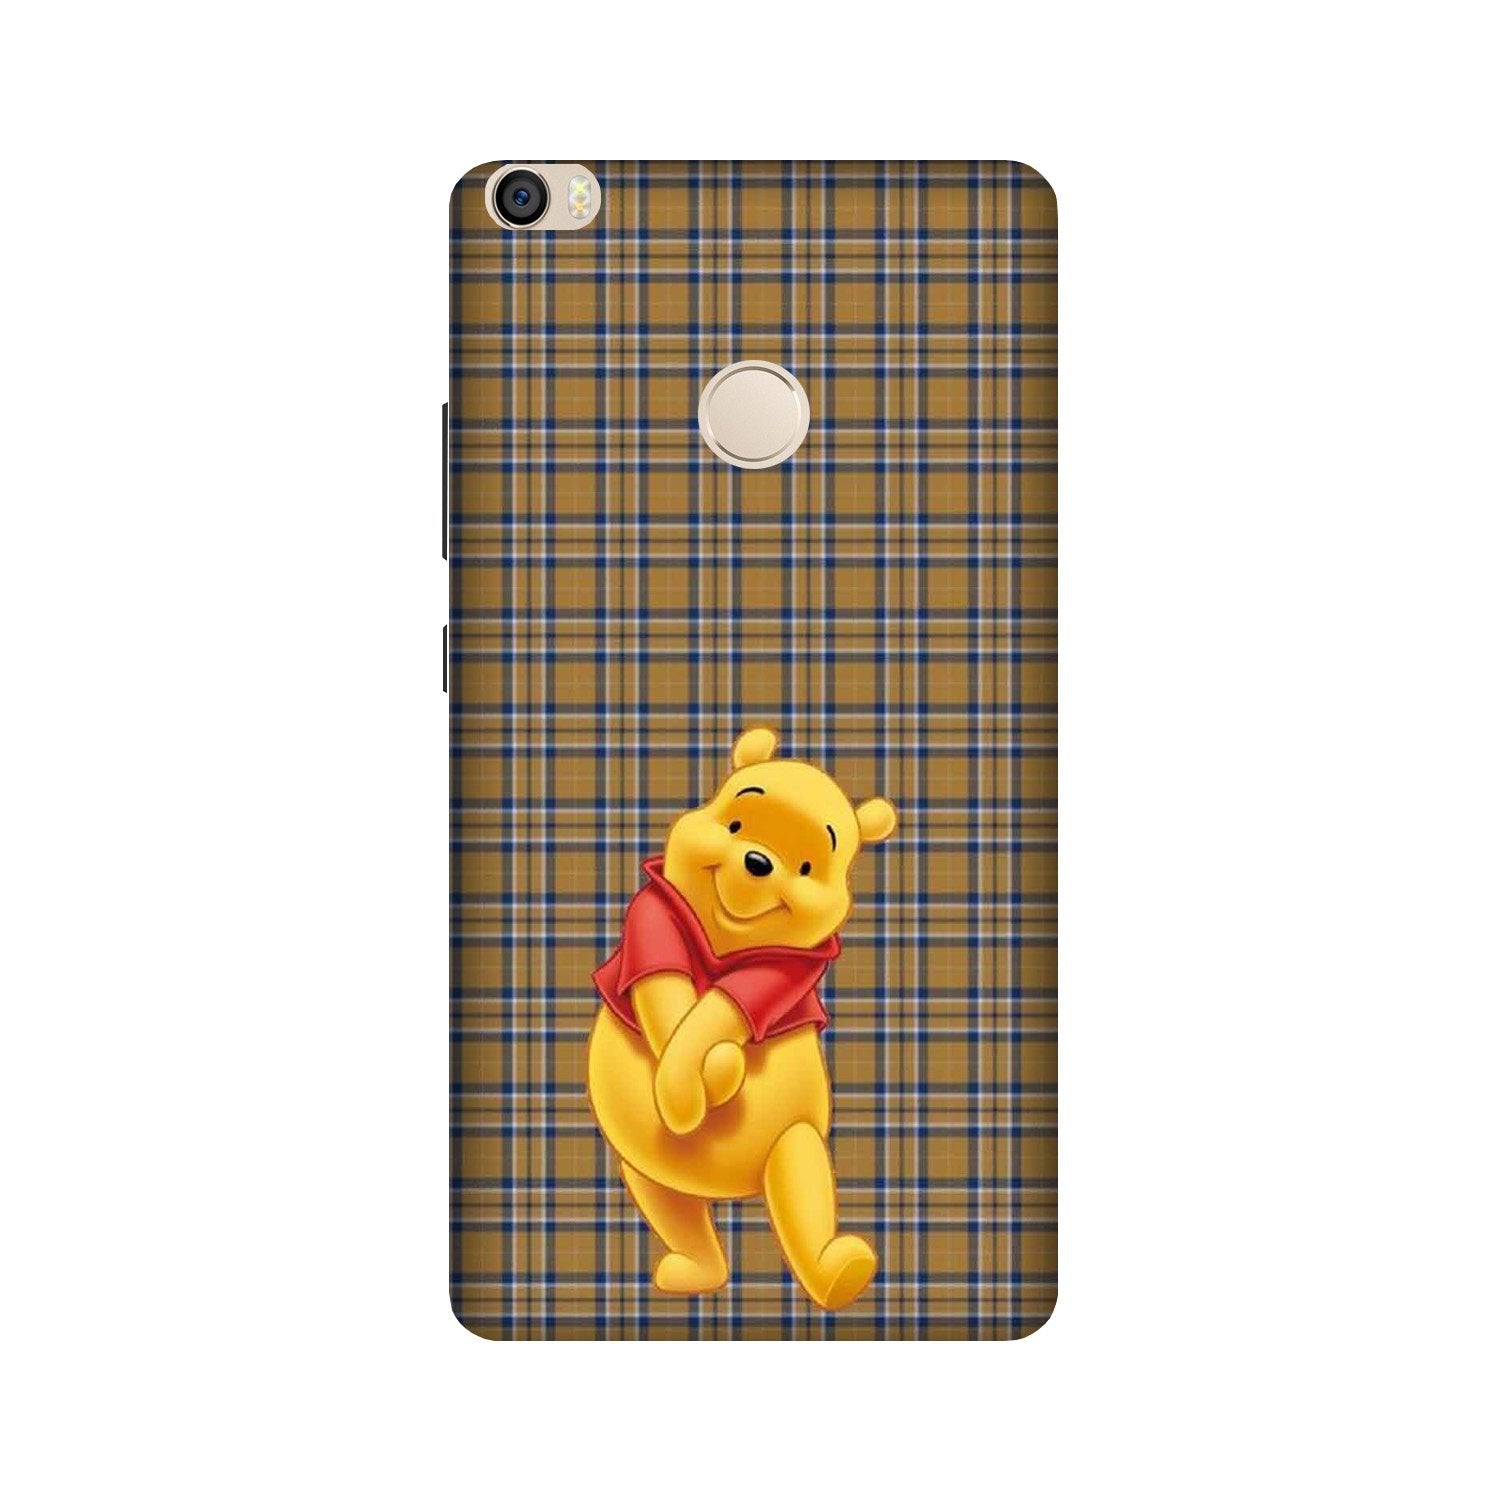 Pooh Mobile Back Case for Mi Max / Max Prime  (Design - 321)